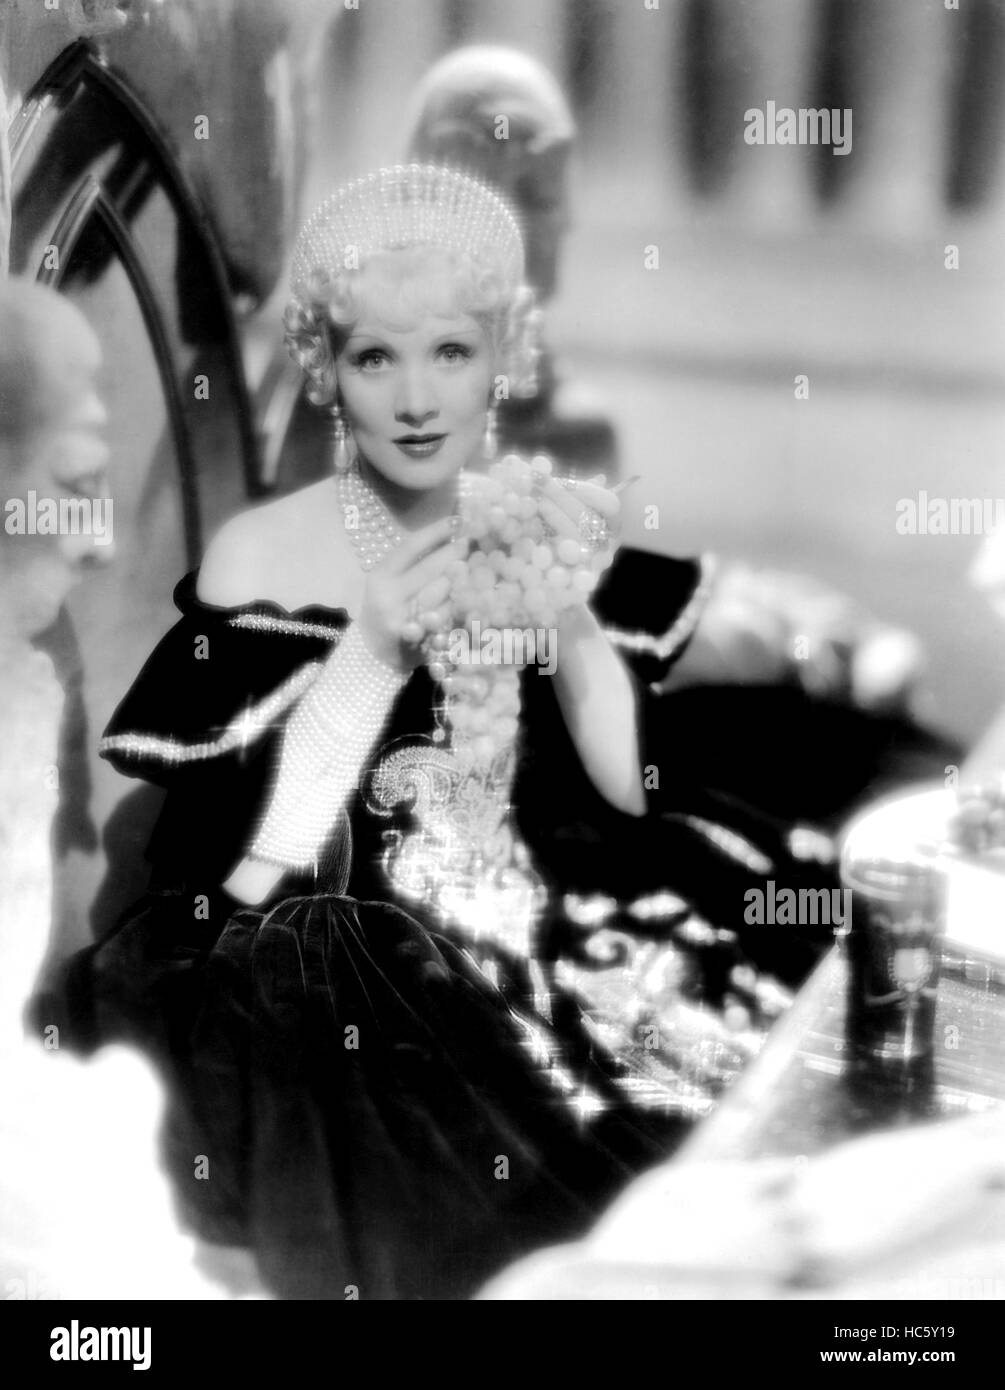 THE SCARLET EMPRESS, Marlene Dietrich, 1934 Stock Photo - Alamy